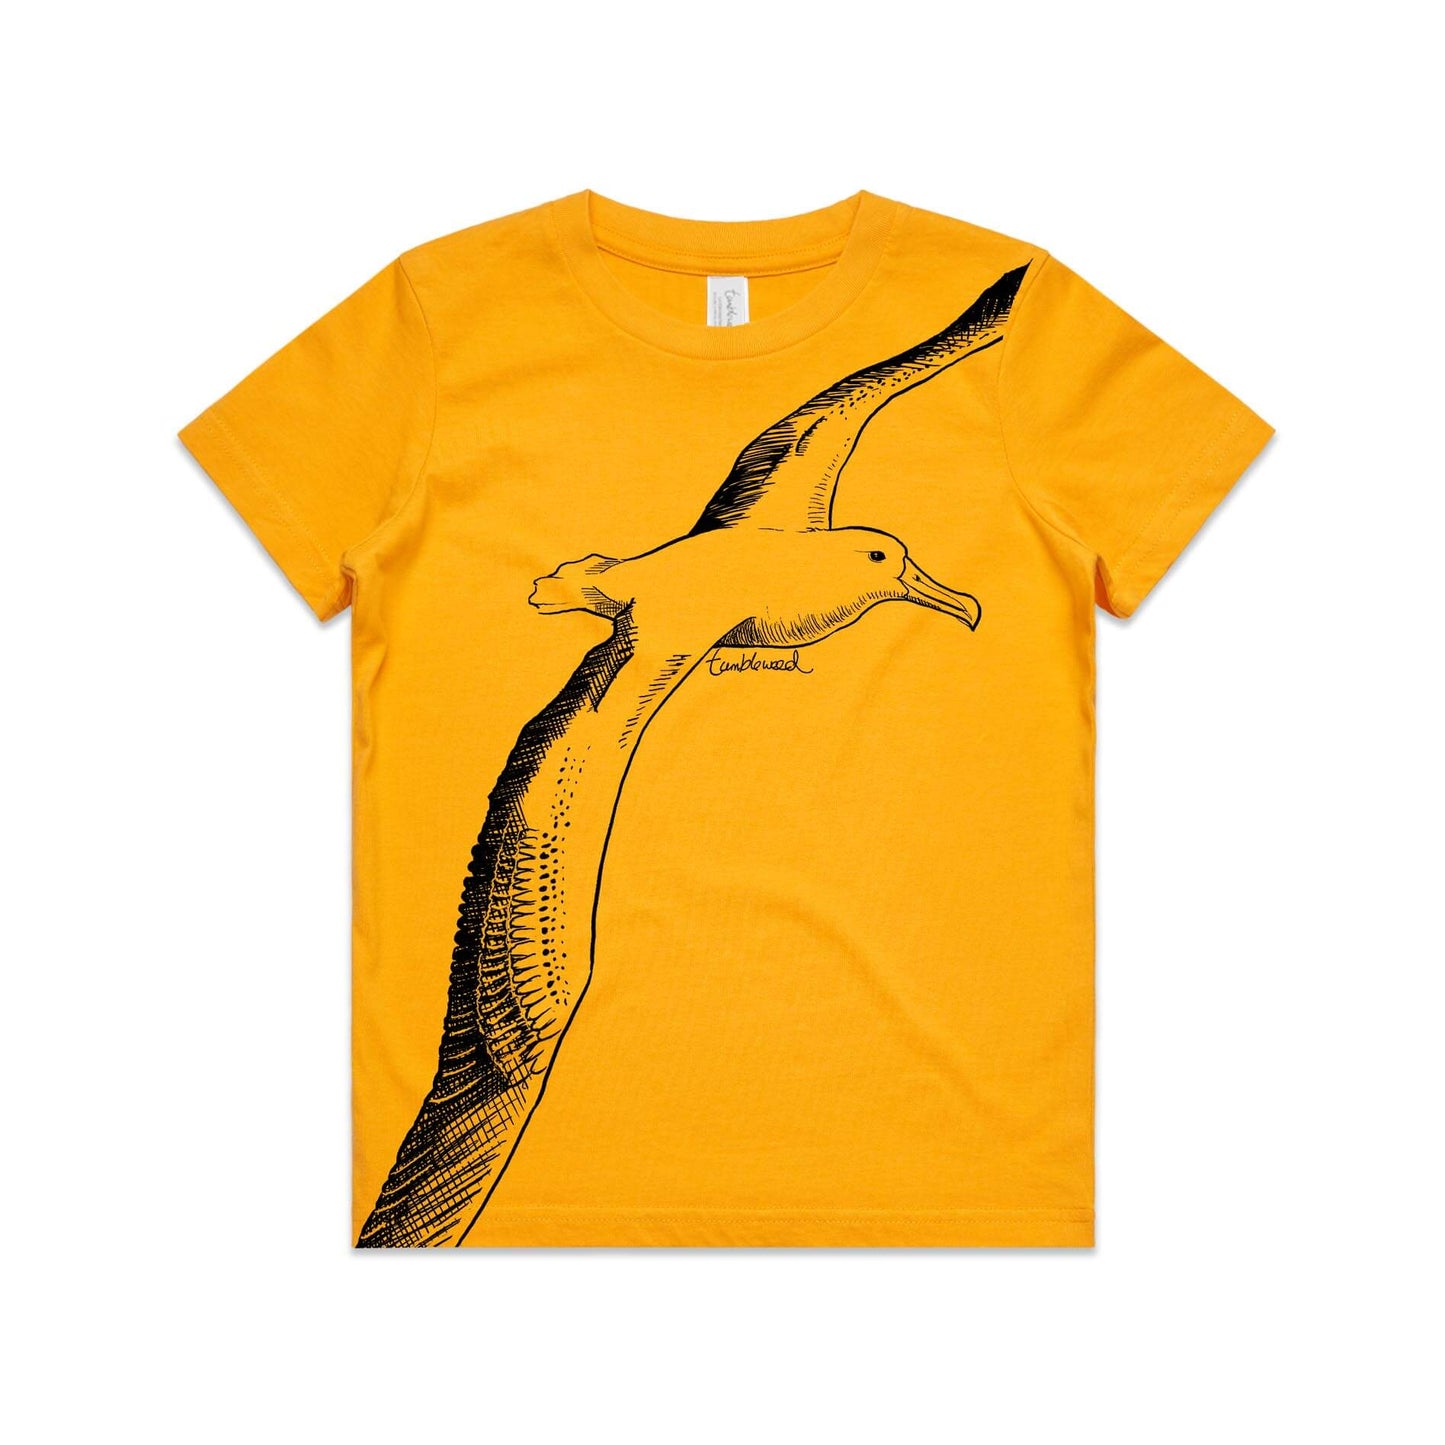 Gold, cotton kids' t-shirt with screen printed albatross design.